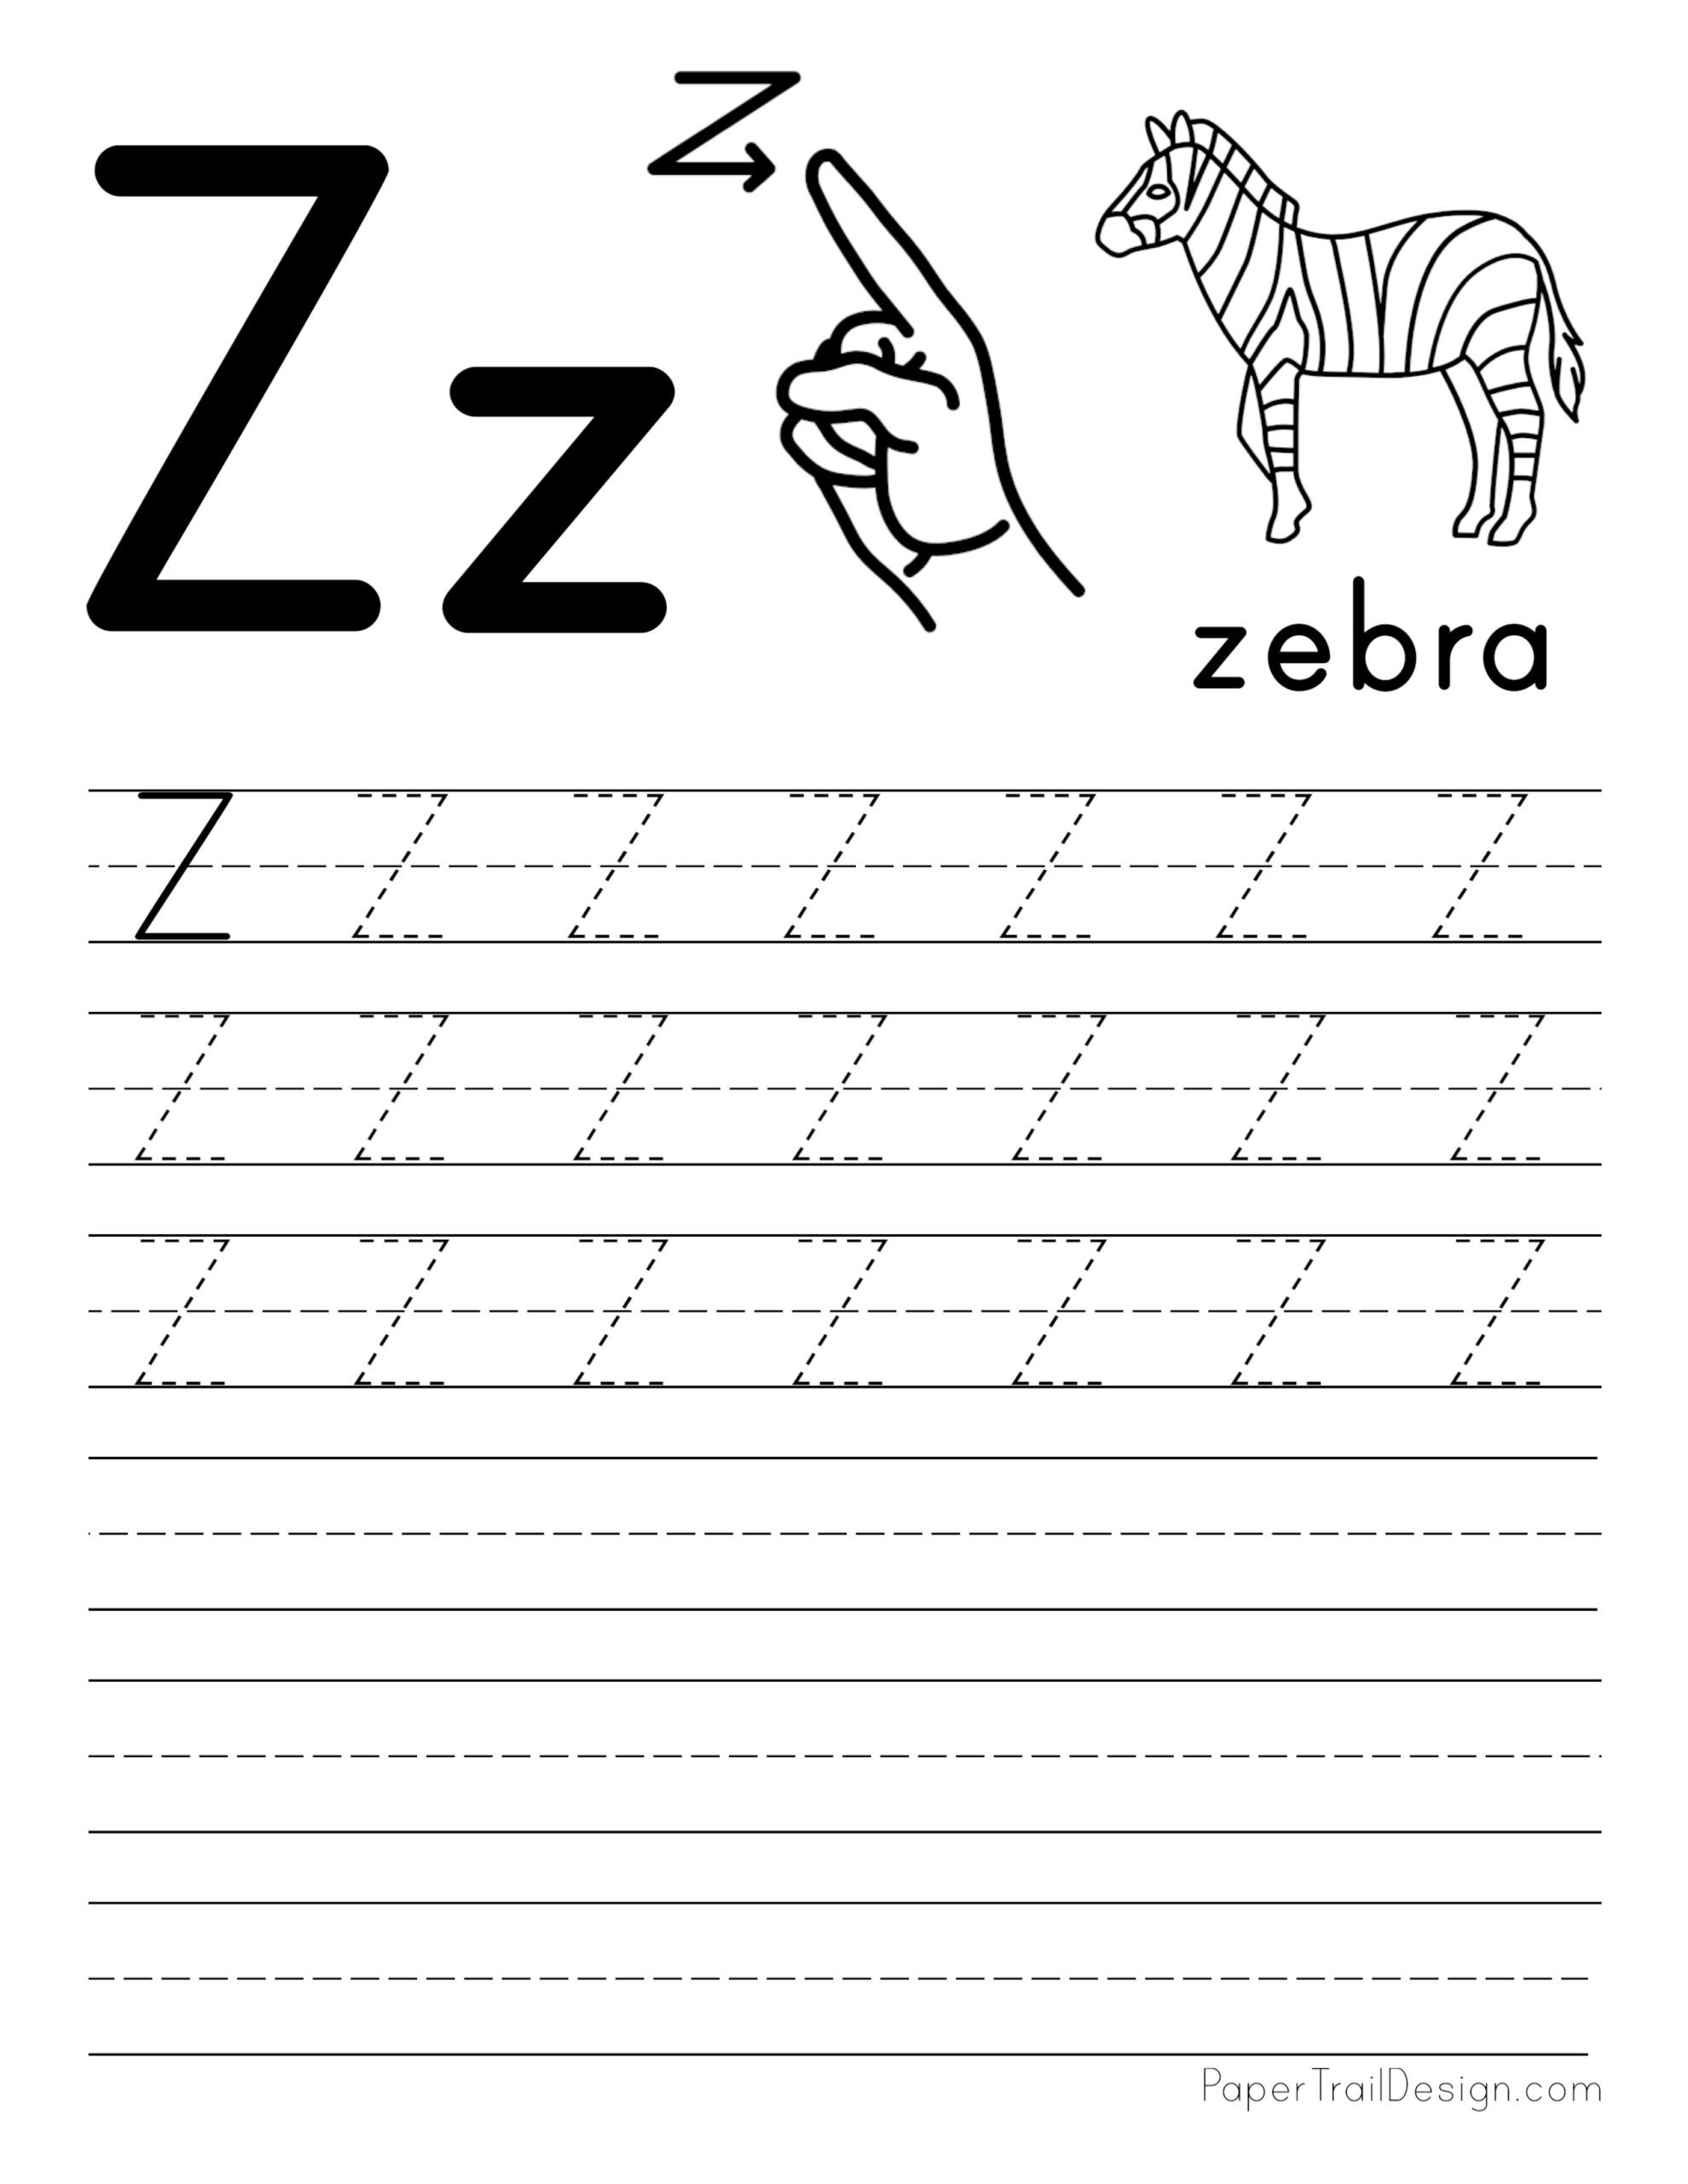 Free Printable Alphabet Handwriting Practice Sheets - Paper Trail Design   Alphabet writing practice, Alphabet handwriting practice, Handwriting  practice sheets